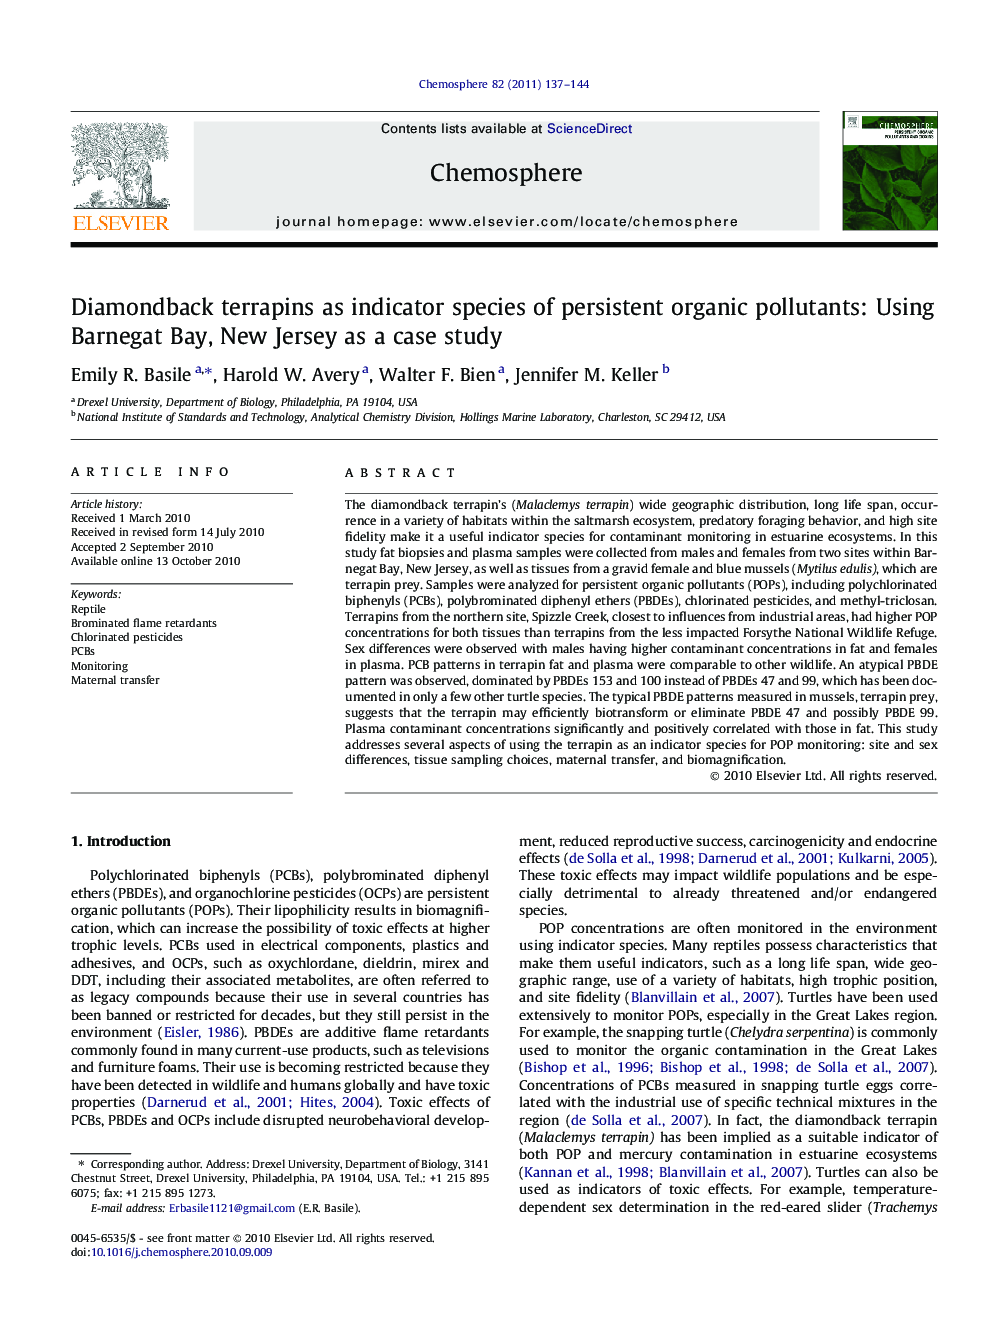 Diamondback terrapins as indicator species of persistent organic pollutants: Using Barnegat Bay, New Jersey as a case study